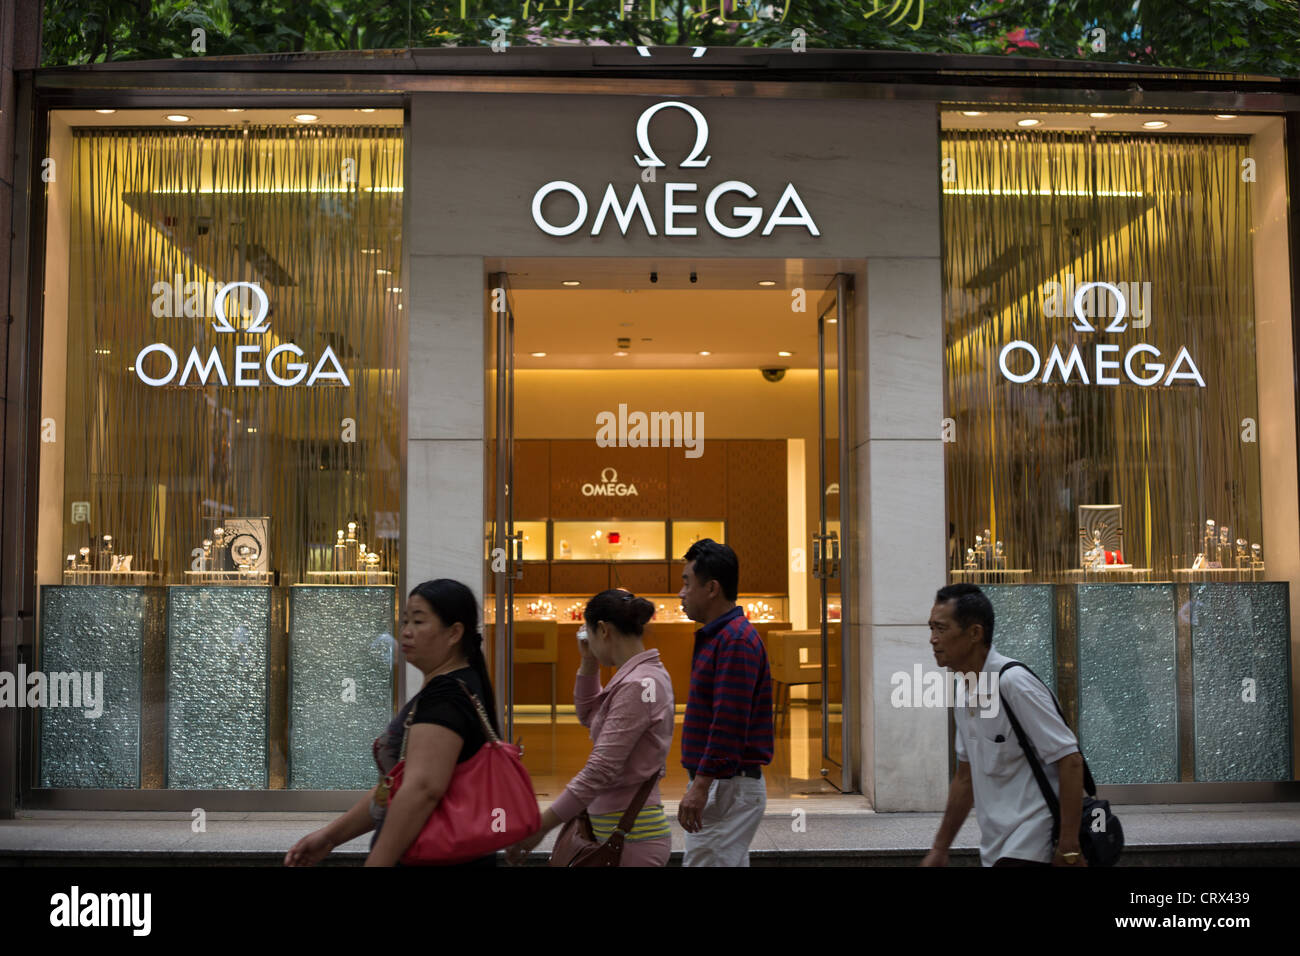 Omega brand watch shop in the Nanjing 